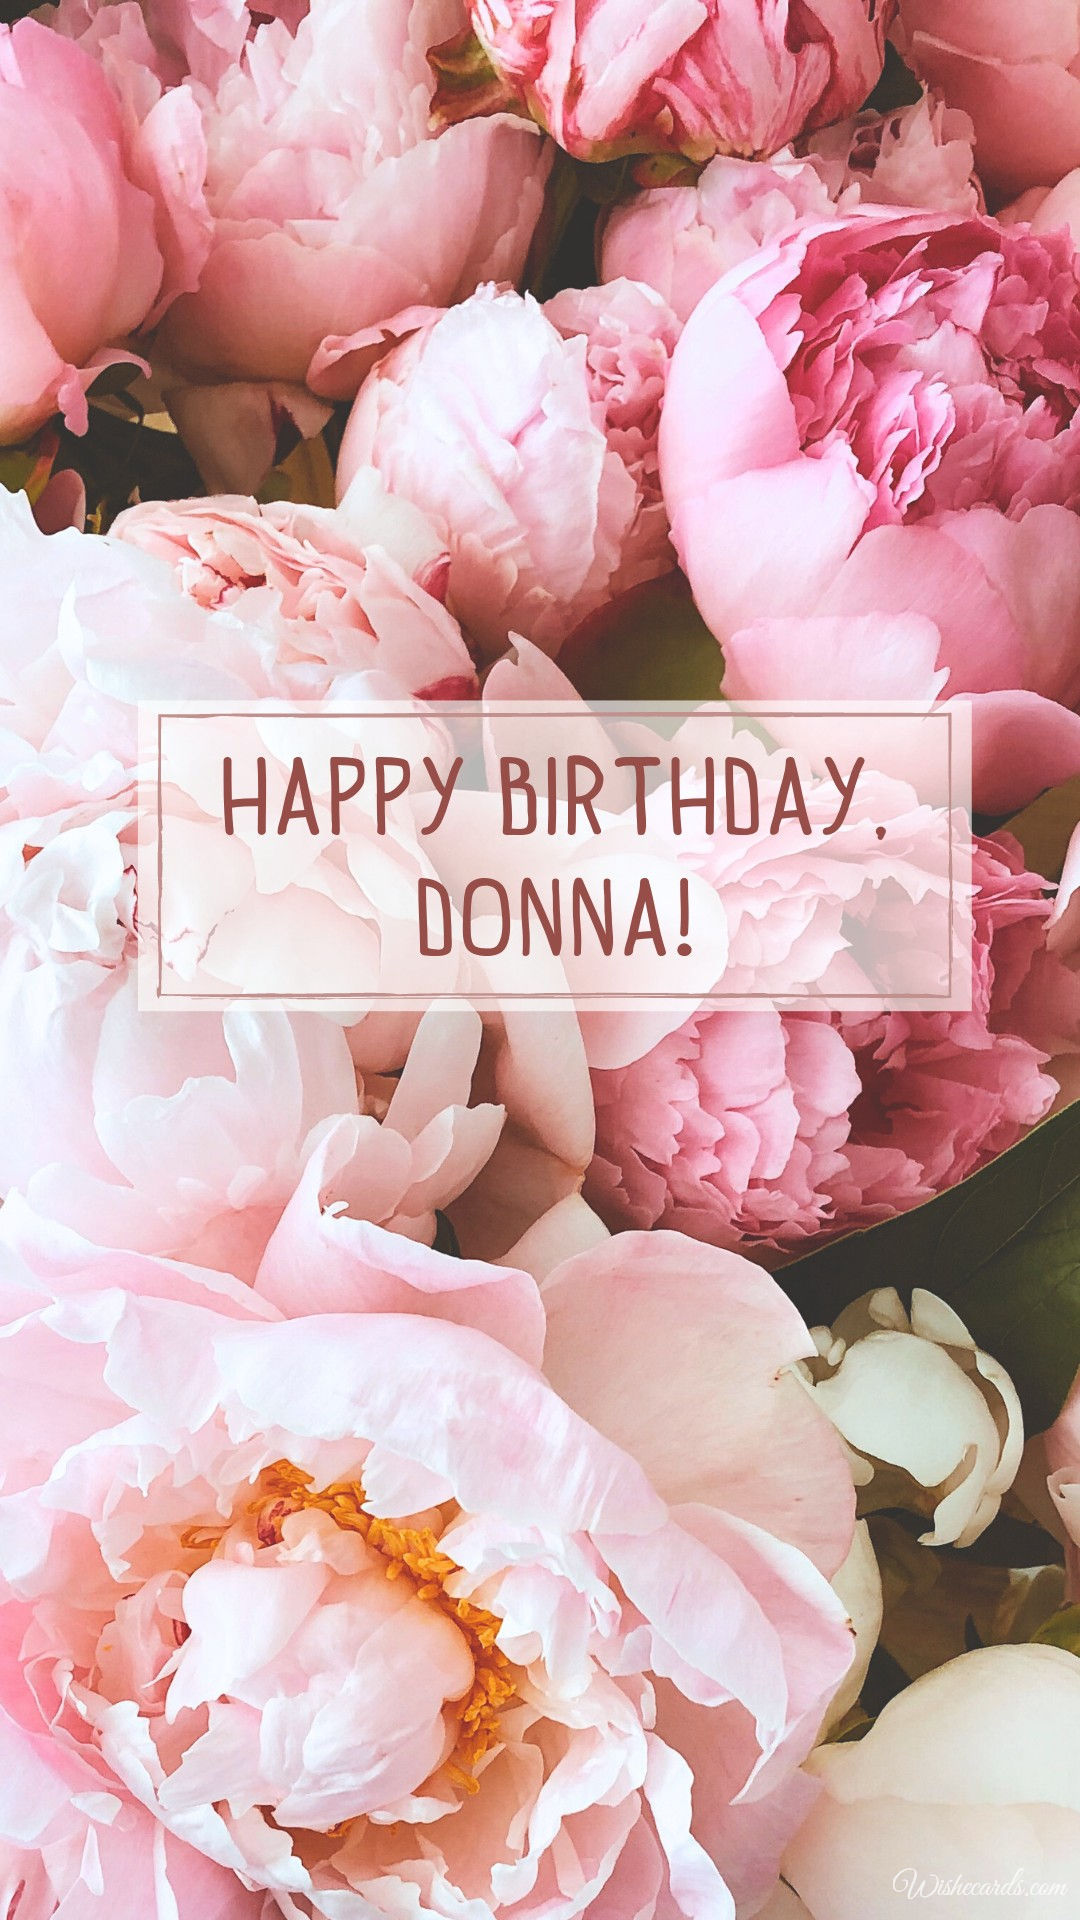 Happy Birthday Donna Image